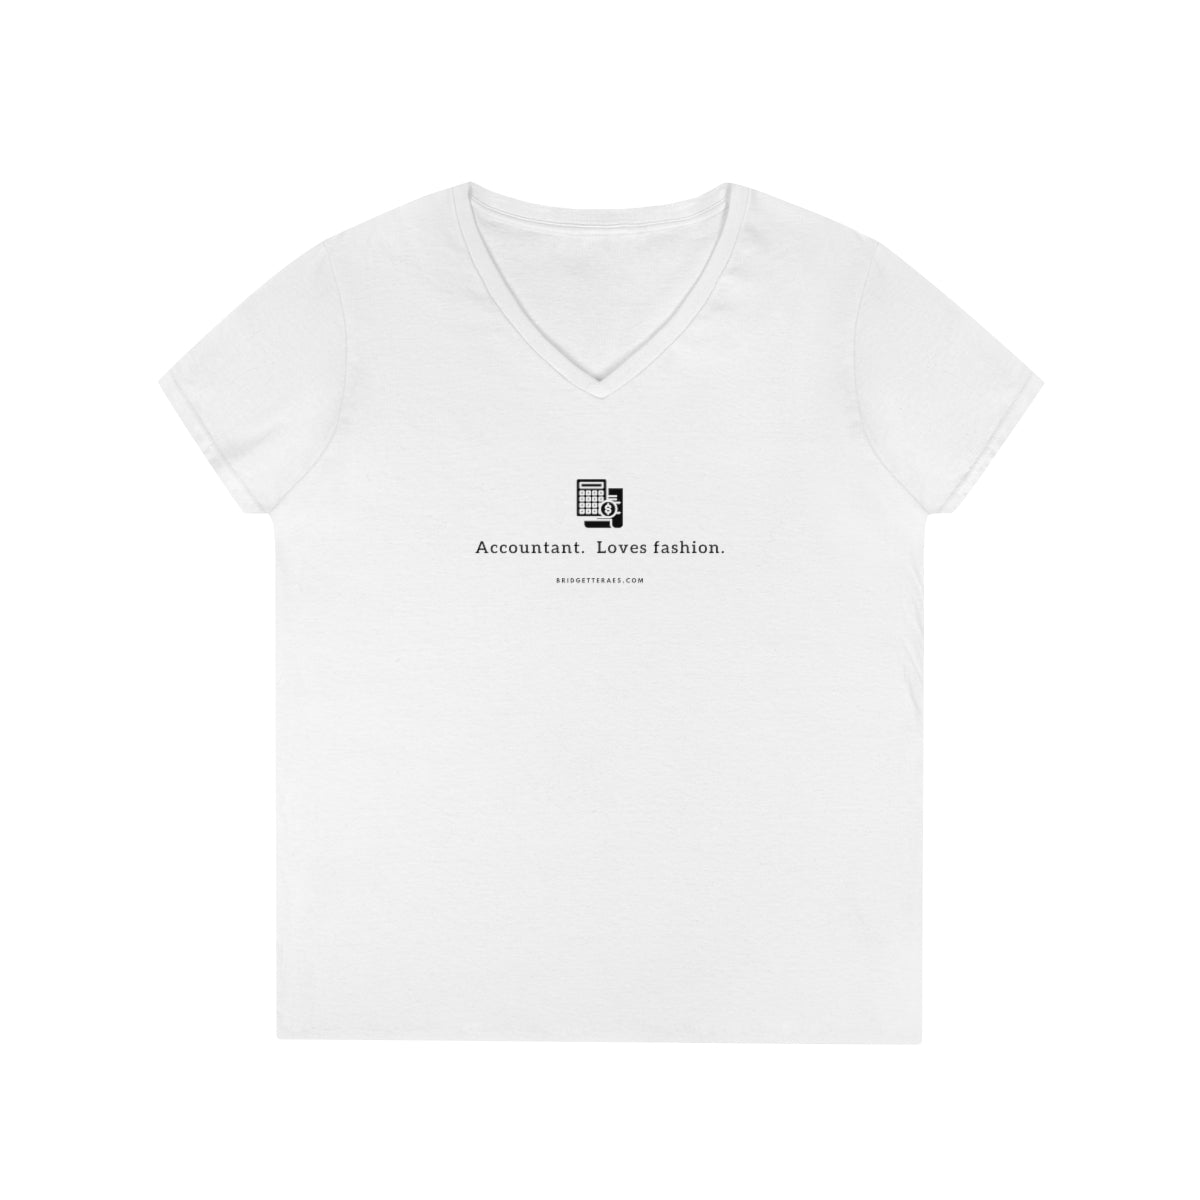 Accountant. Loves Fashion. 100% Cotton V-Neck T-Shirt